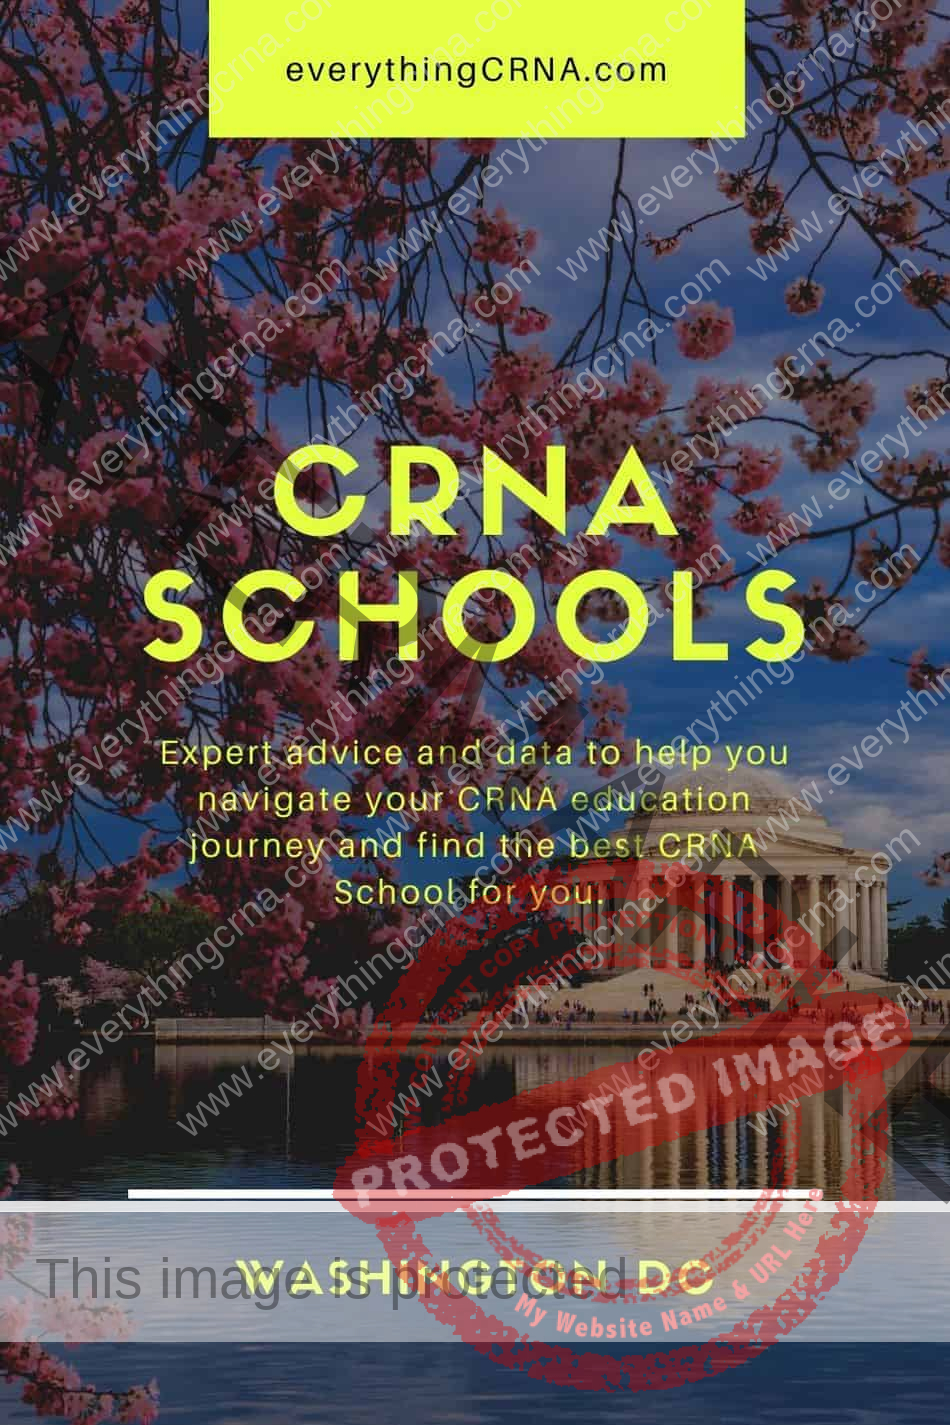 CRNA Schools in DC